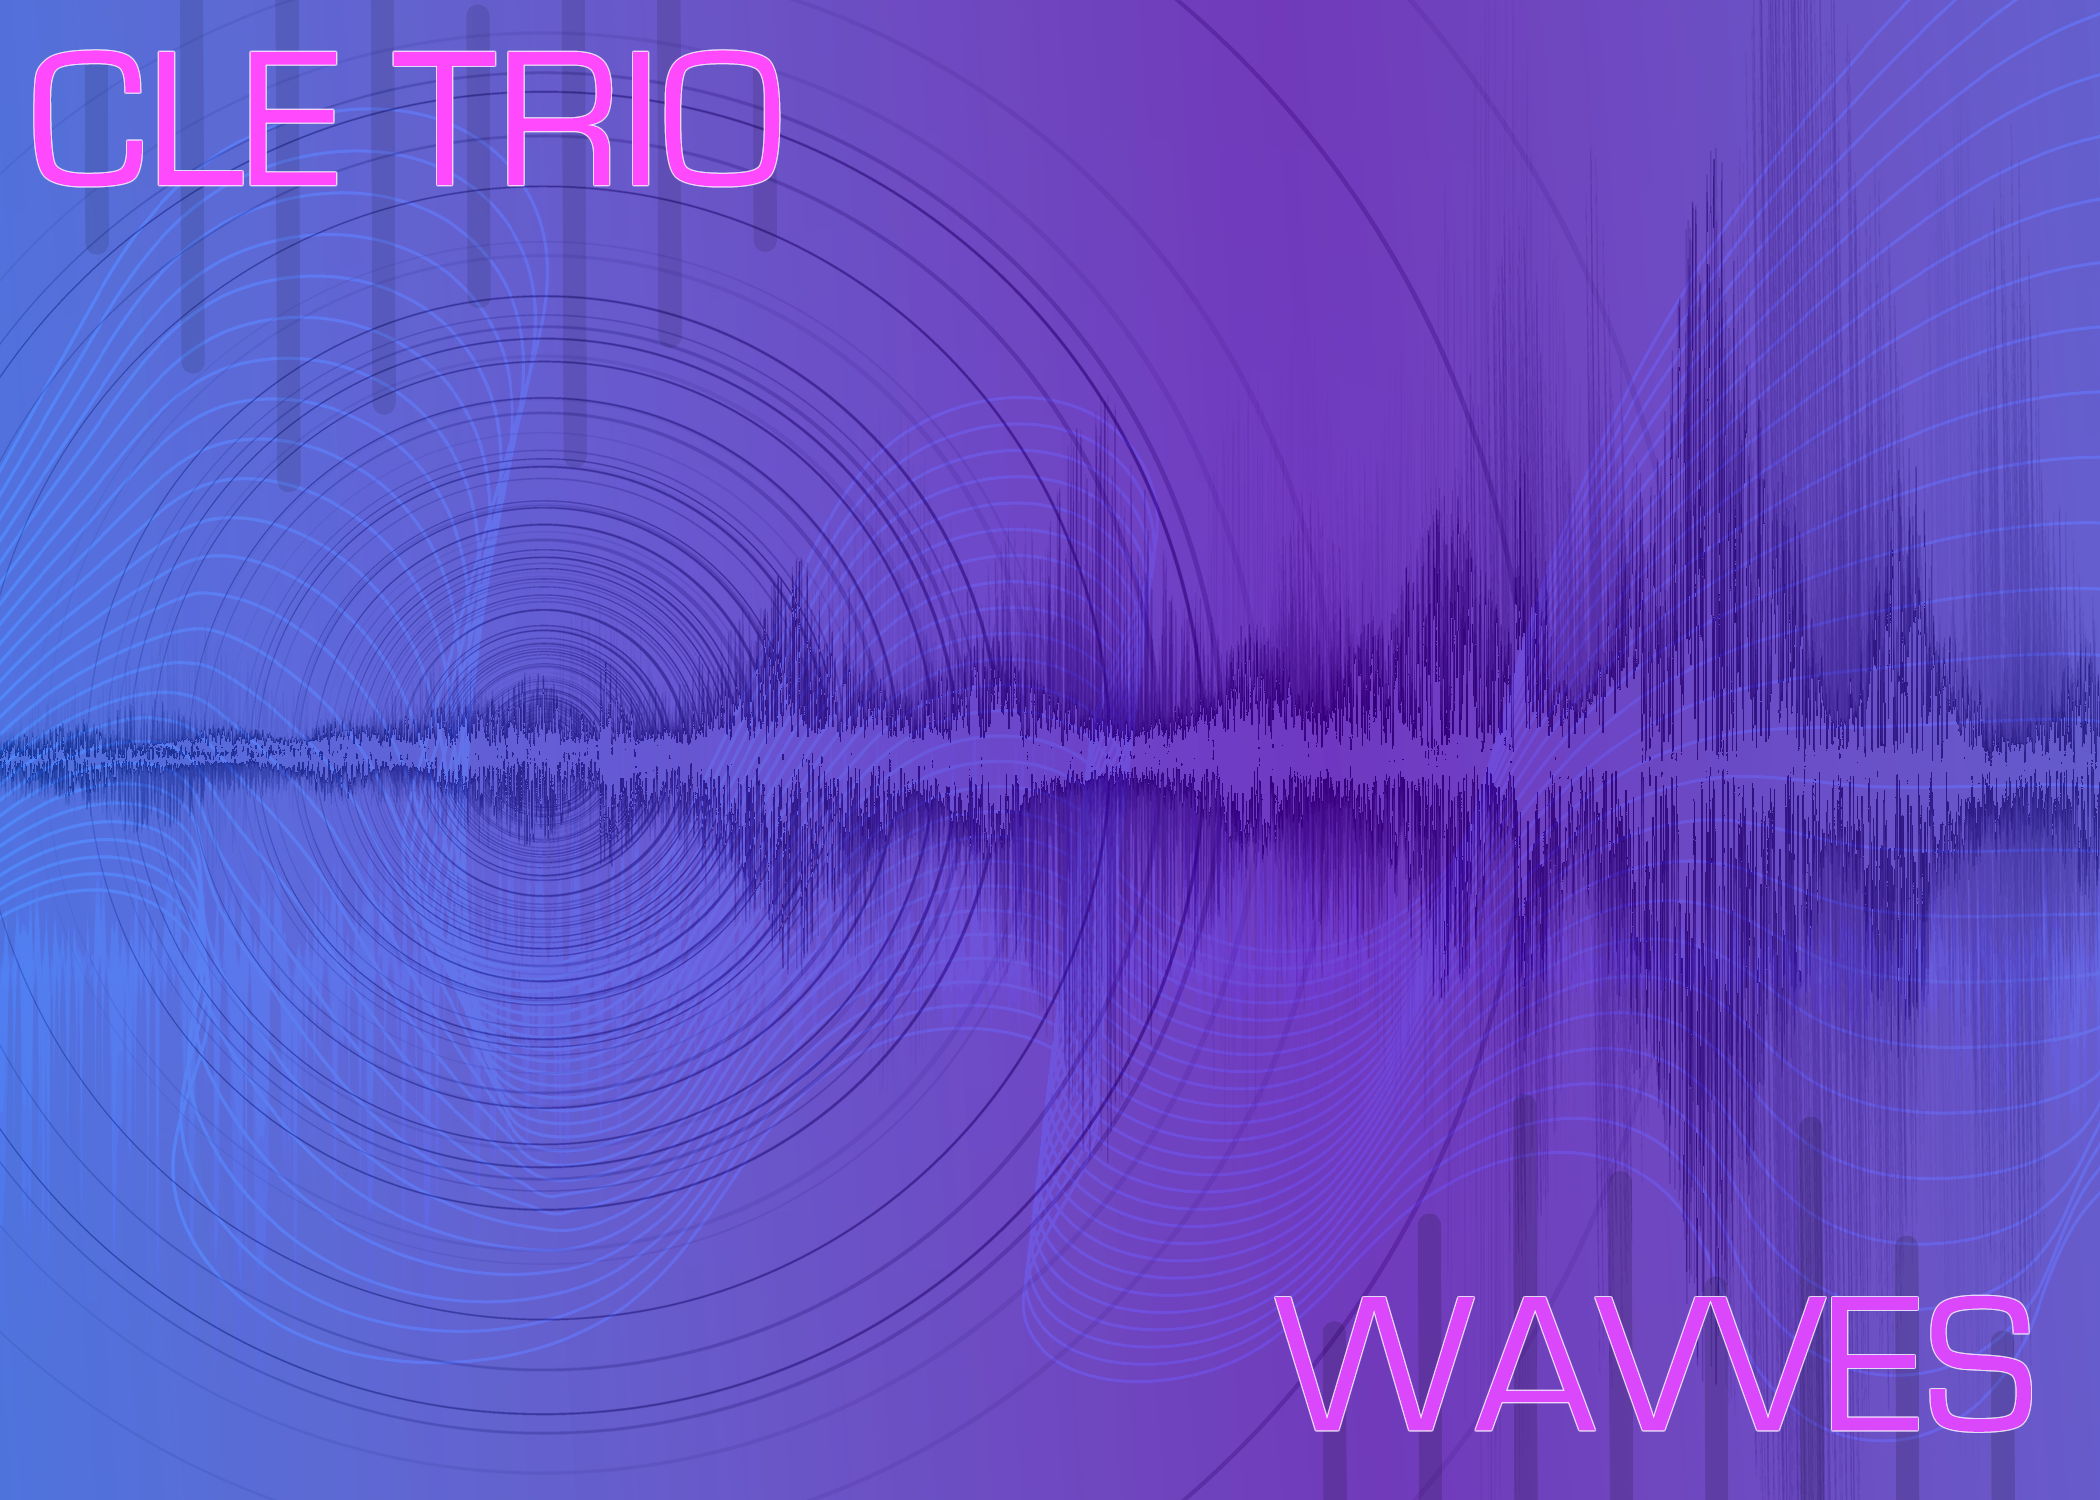 CLETrio-Wavves (feat. Joe Hanson)